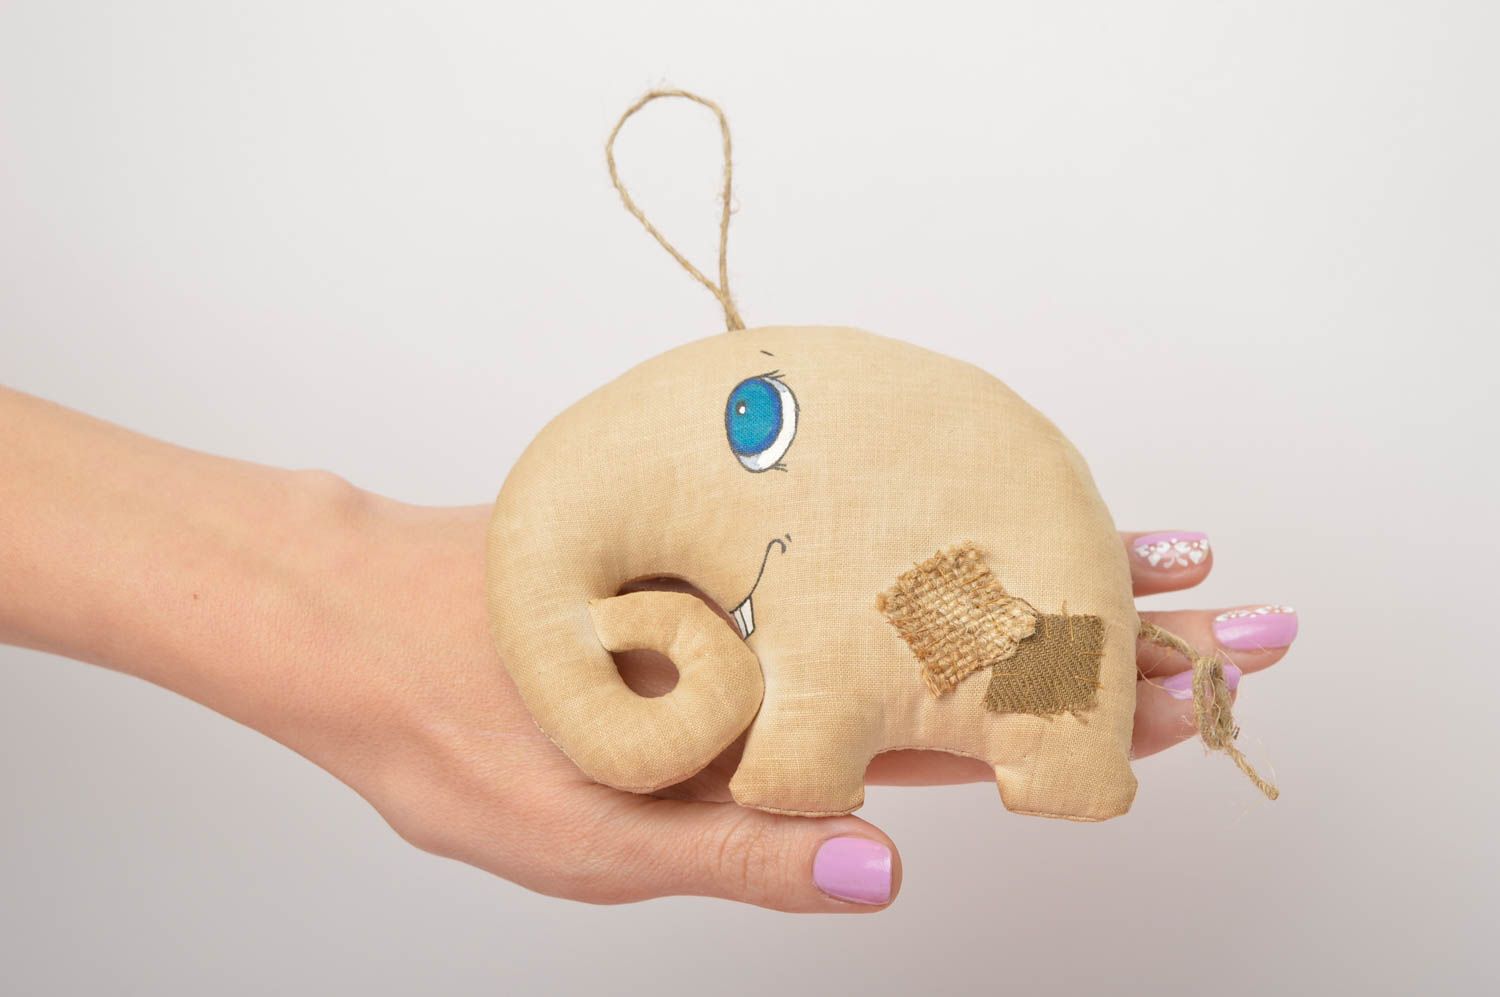 Handmade designer soft toy elephant stuffed toy for children home decor ideas photo 1